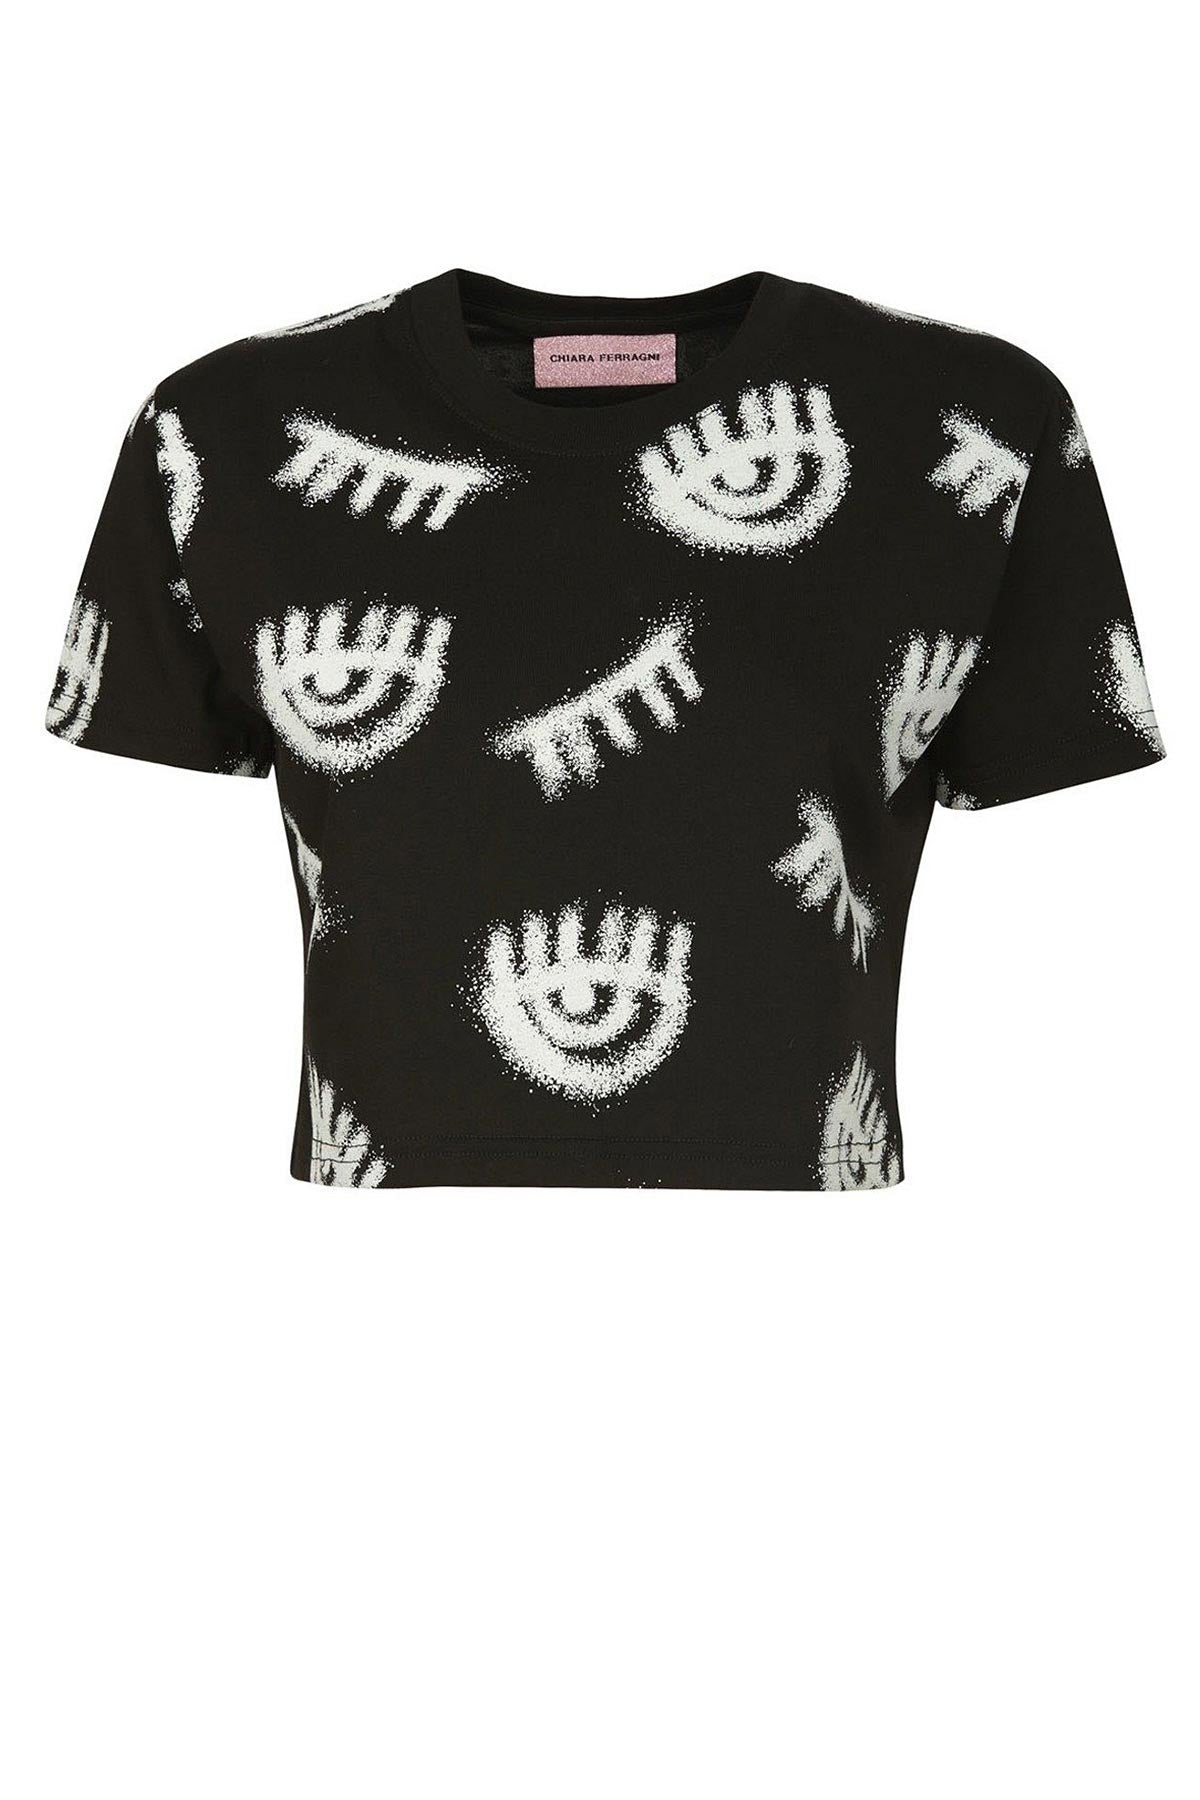 Chiara Ferragni Crop Top T-shirt-Libas Trendy Fashion Store